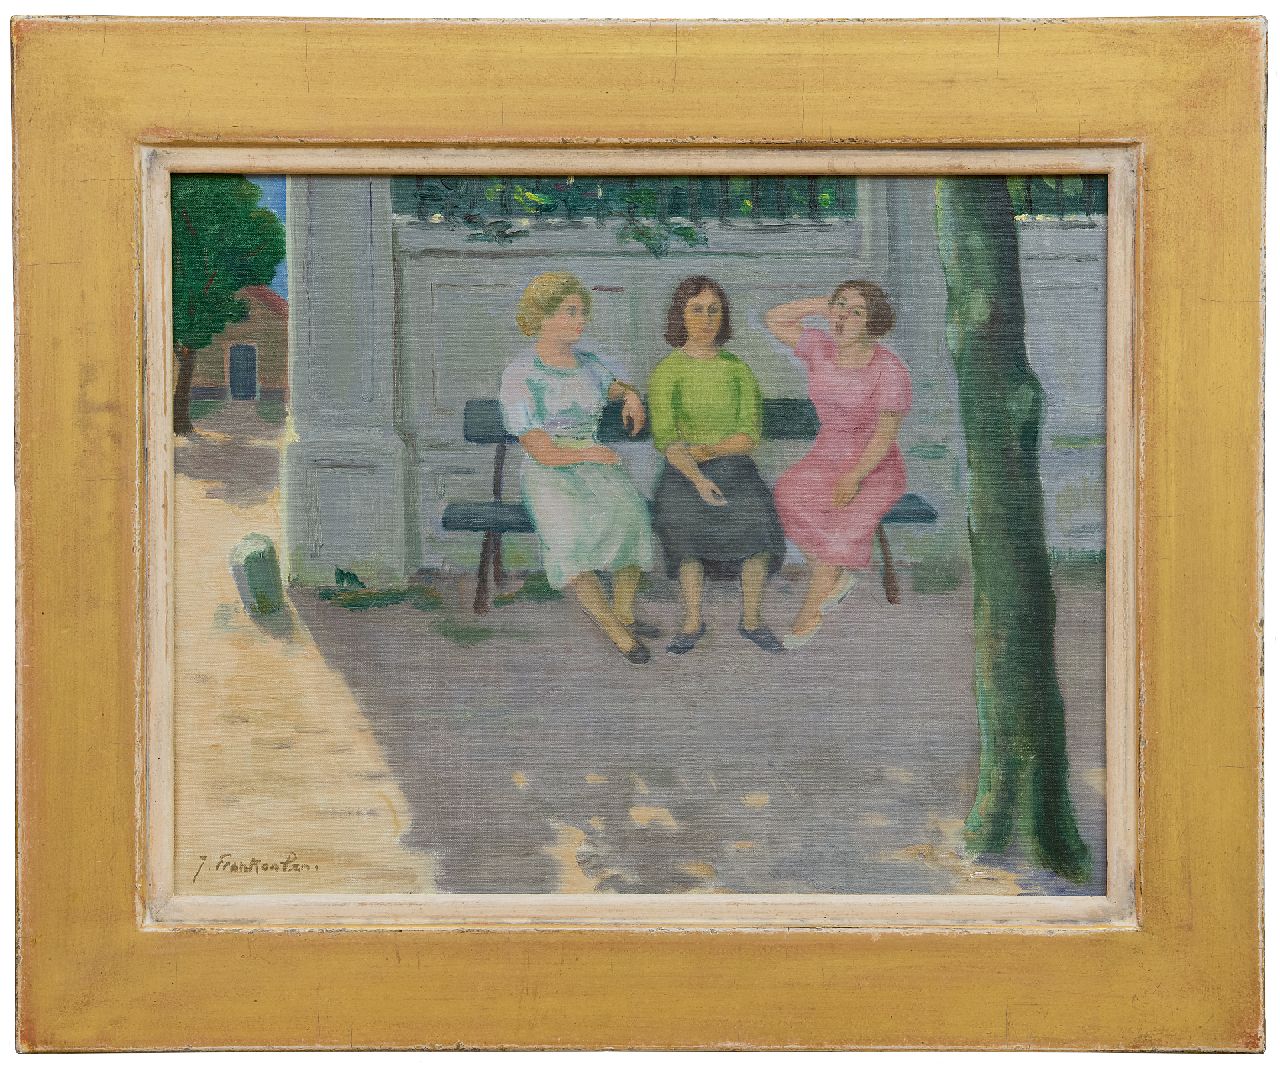 Franken J.P.J.  | Joannes Petrus Josephus 'Jan' Franken | Paintings offered for sale | Three women on a bench, oil on canvas 35.4 x 45.2 cm, signed l.l.